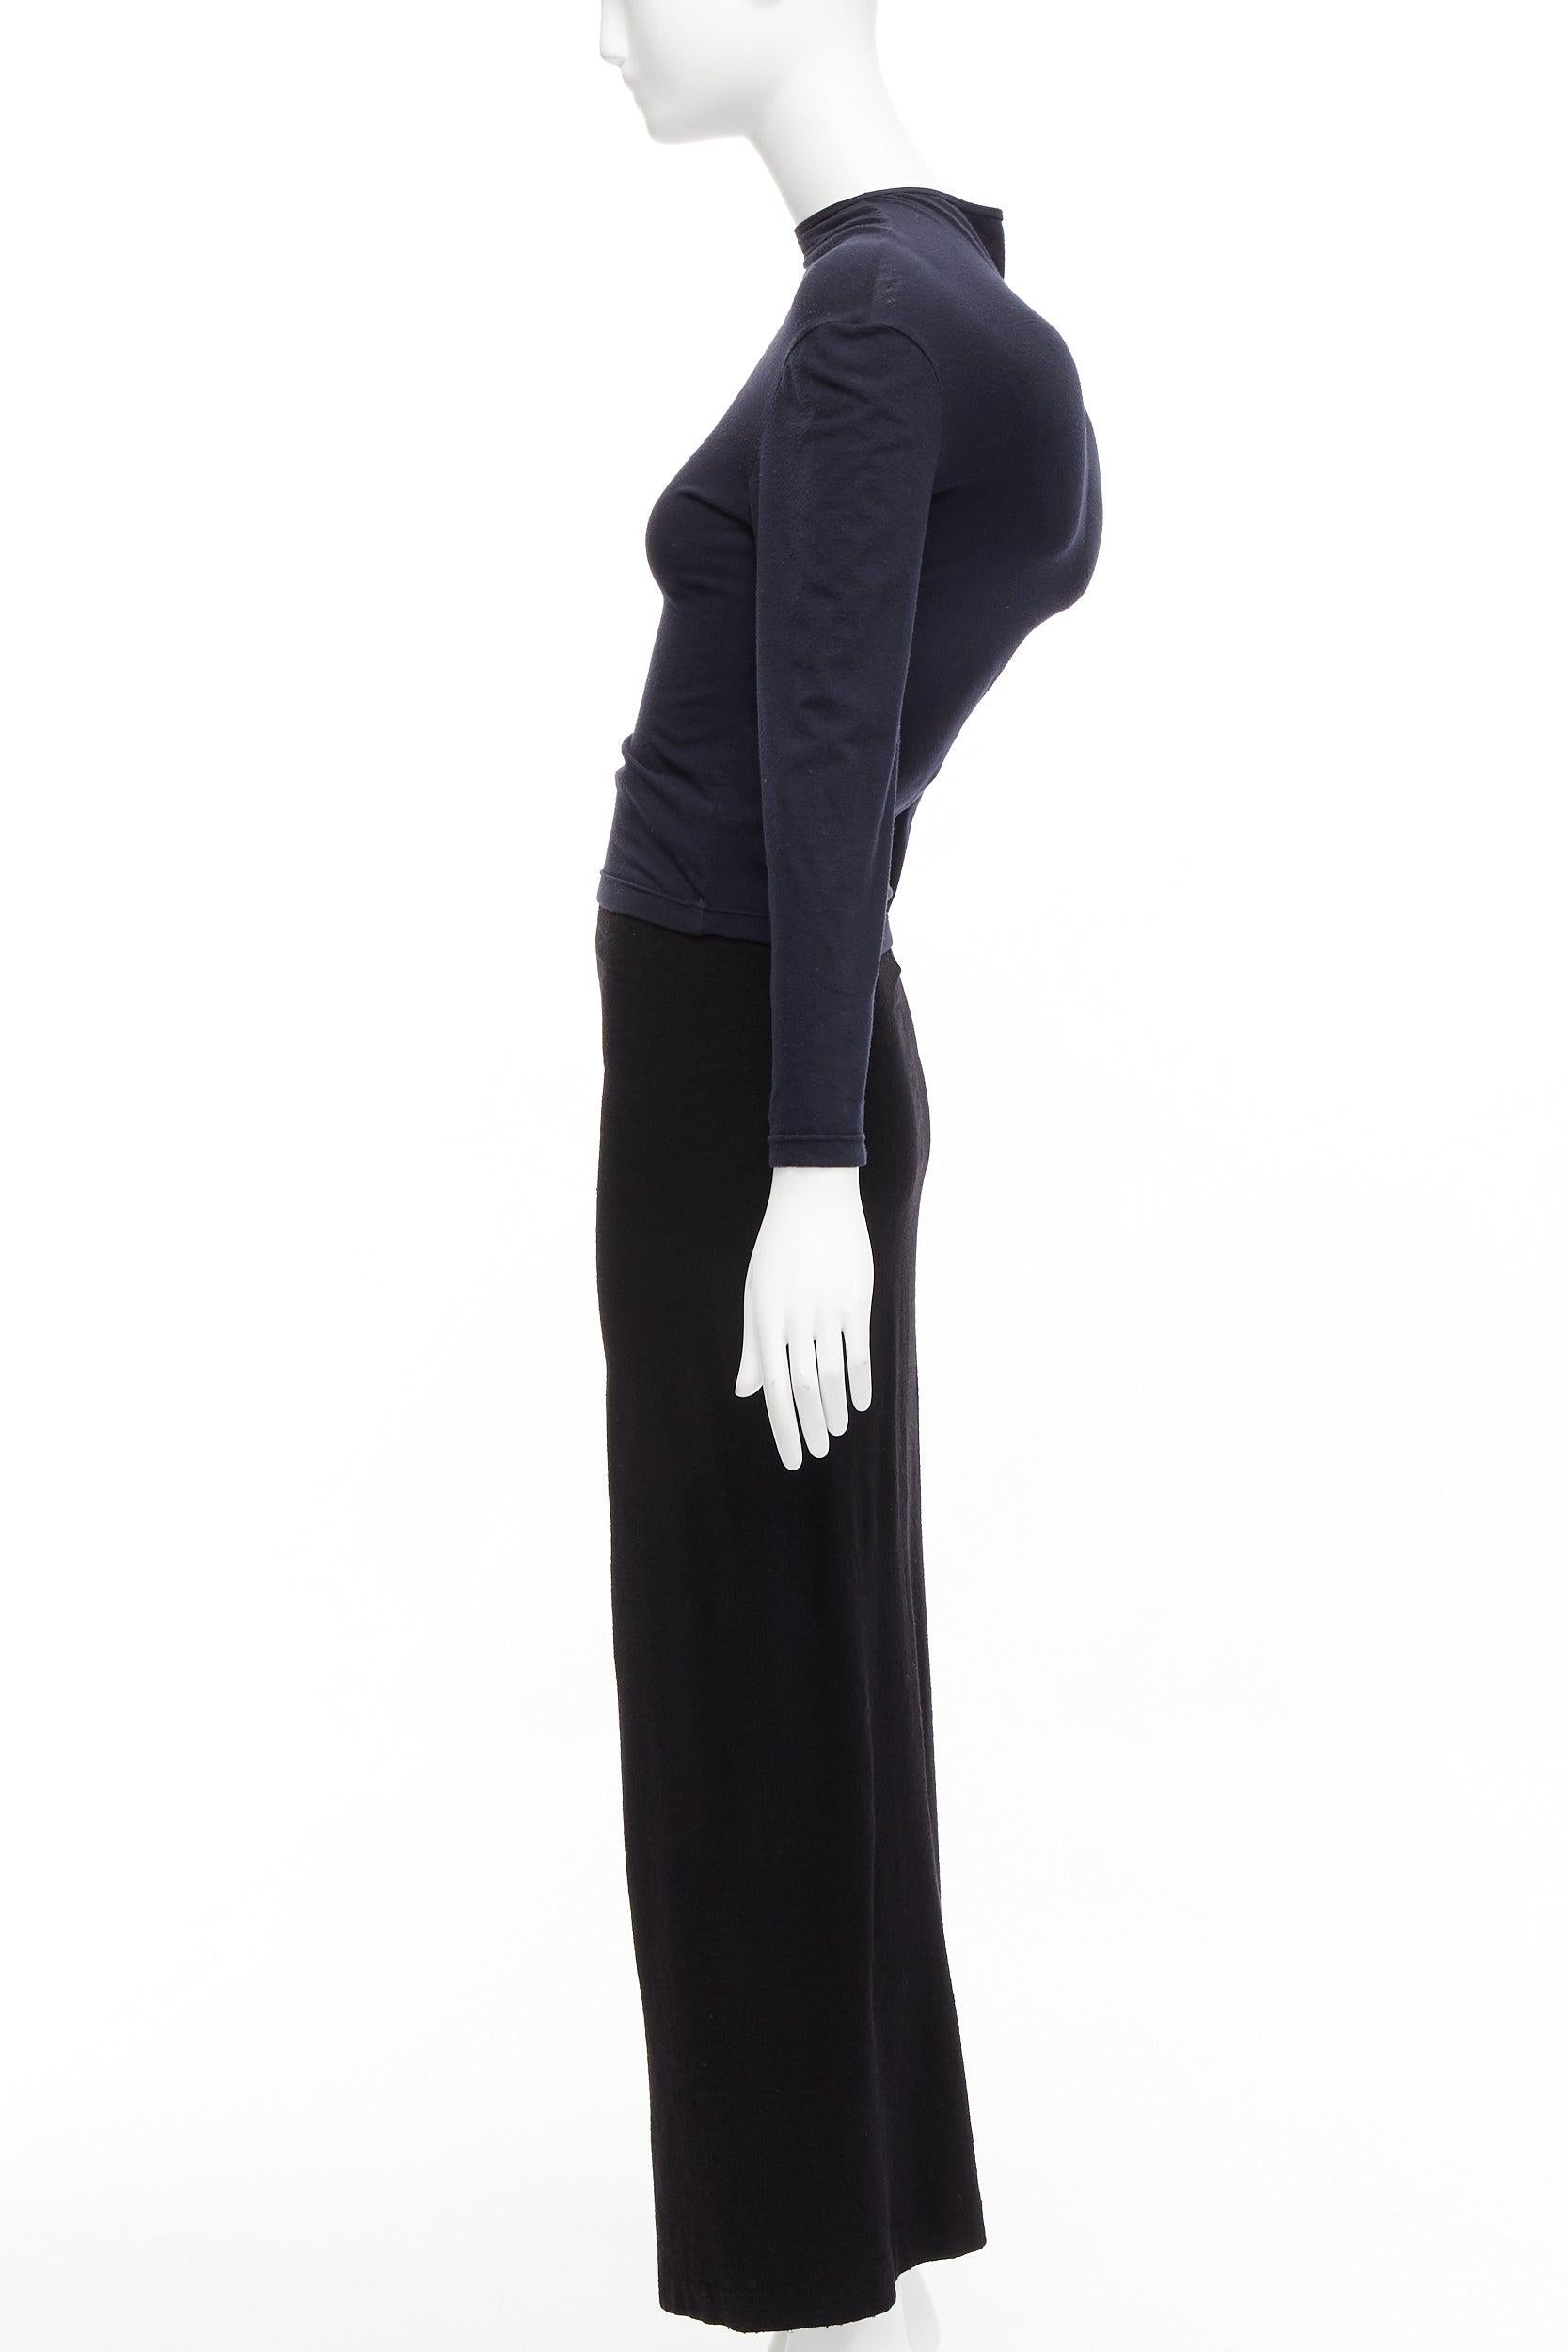 COMME DES GARCONS 1997 Lumps Bumps black padded irregular top gathered skirt M For Sale 6